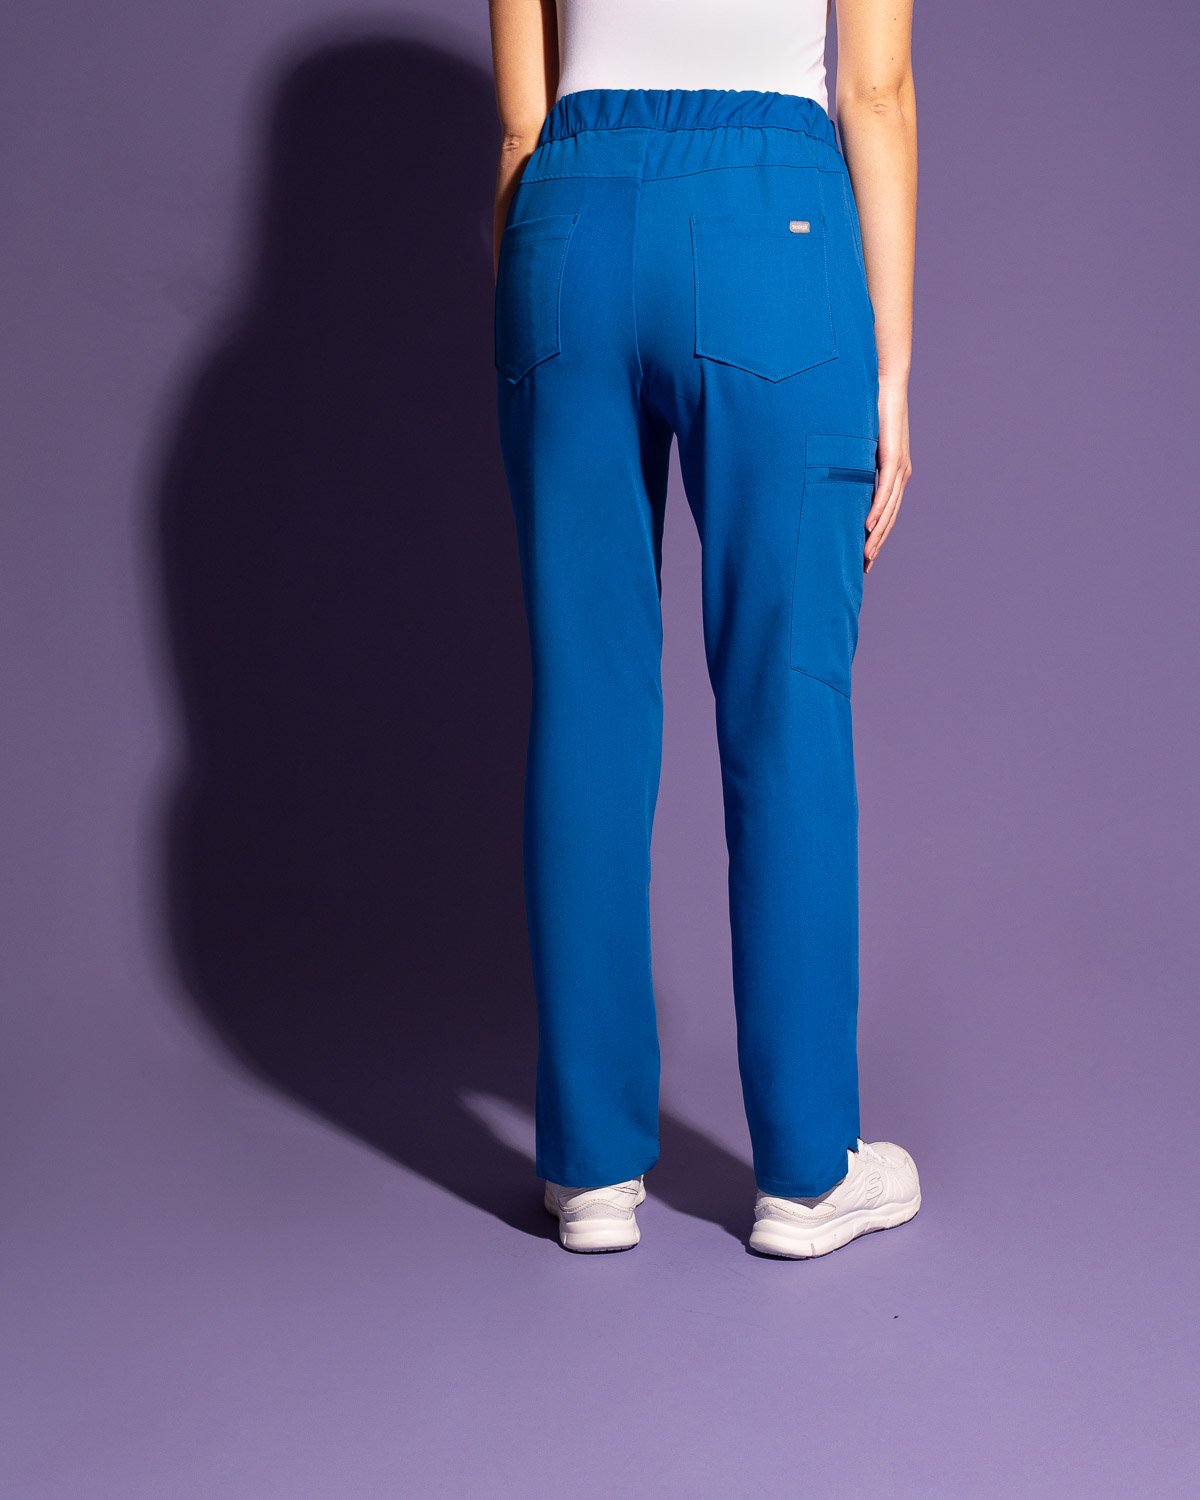 Pantalón Mujer Azul Rey, Uniformes Clínicos